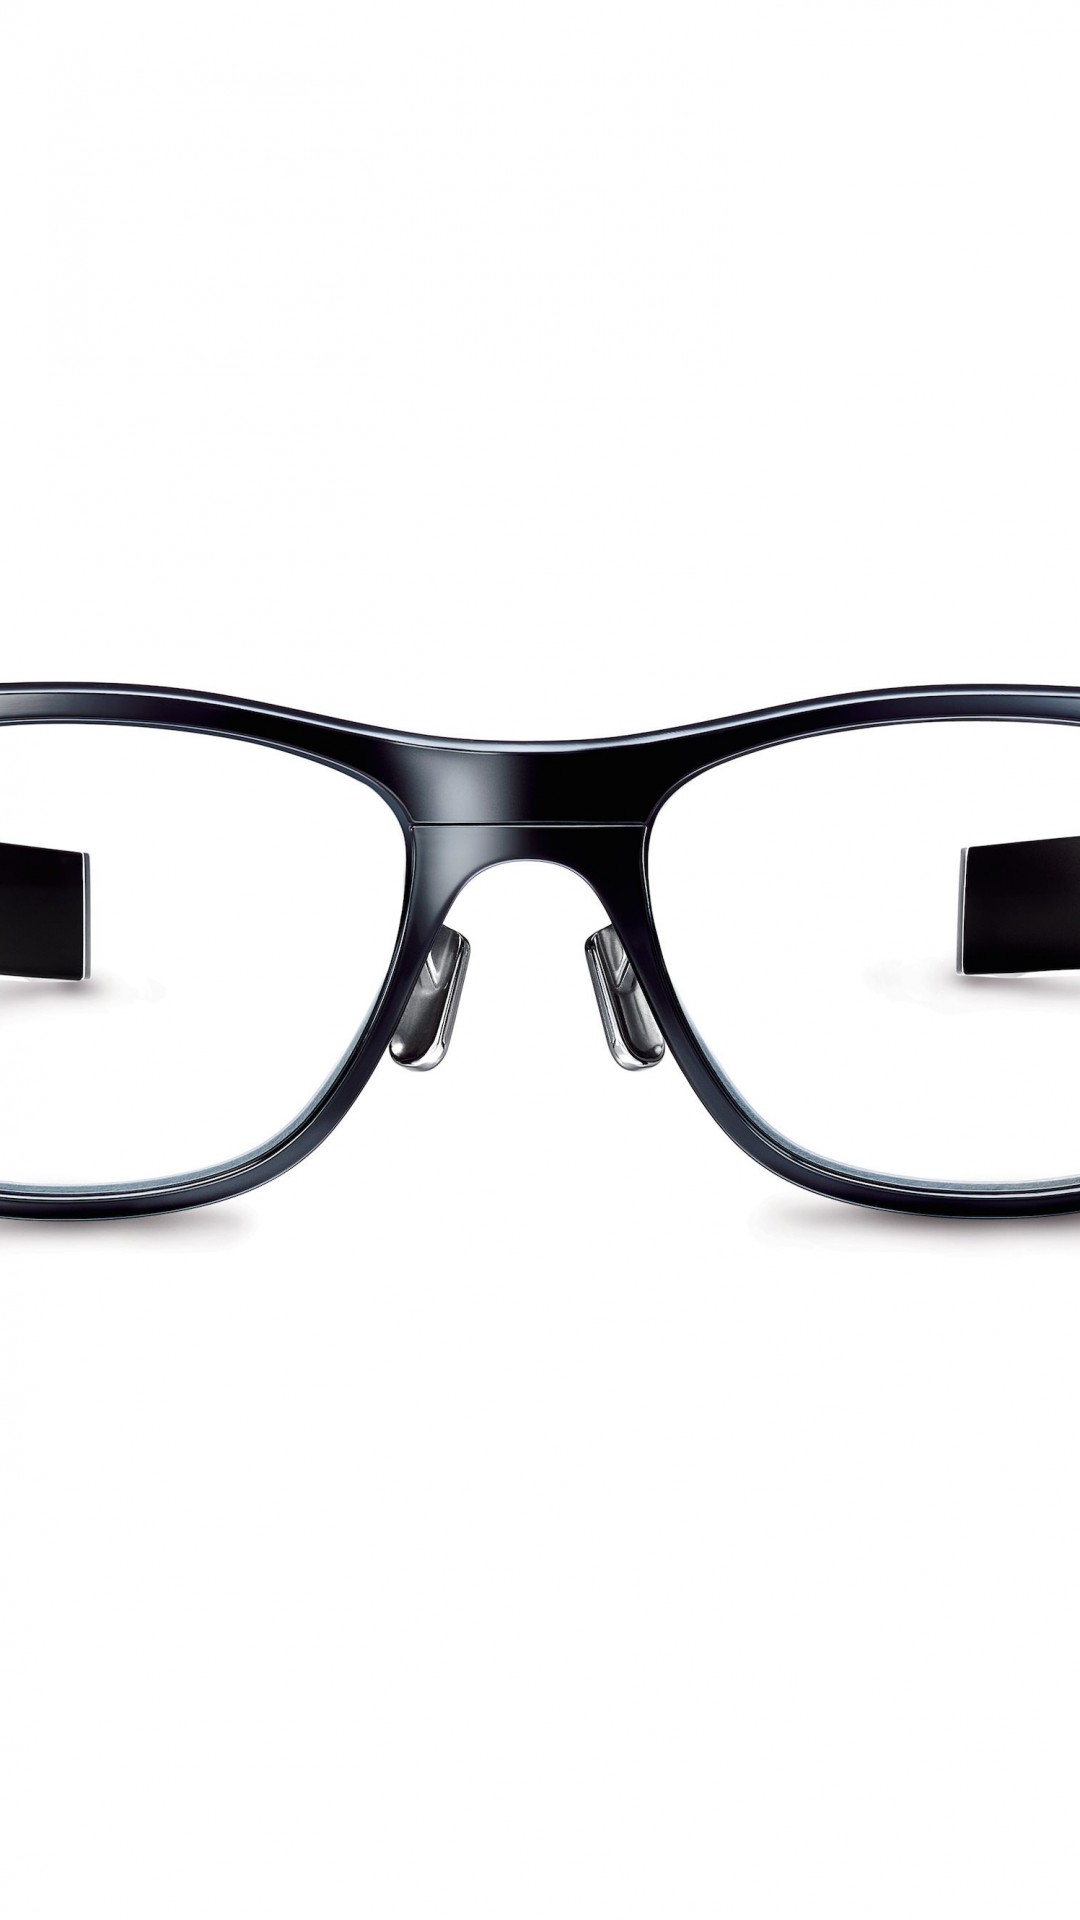 Jins Meme Smart Glasses Wallpaper for SONY Xperia Z3